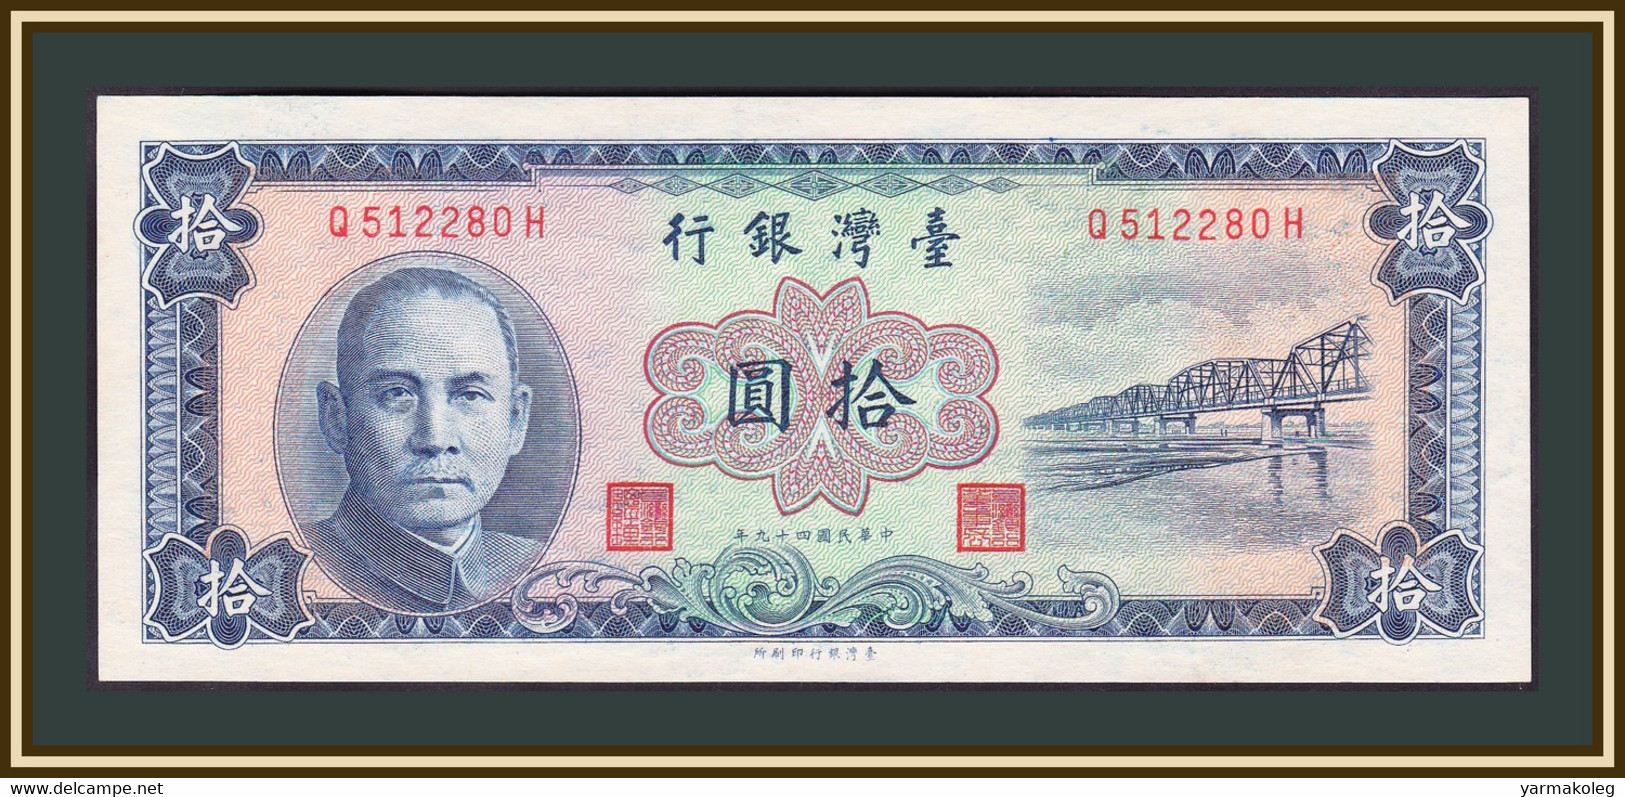 Taiwan (China) 10 Dollars 1963 P-1969 UNC - Taiwan